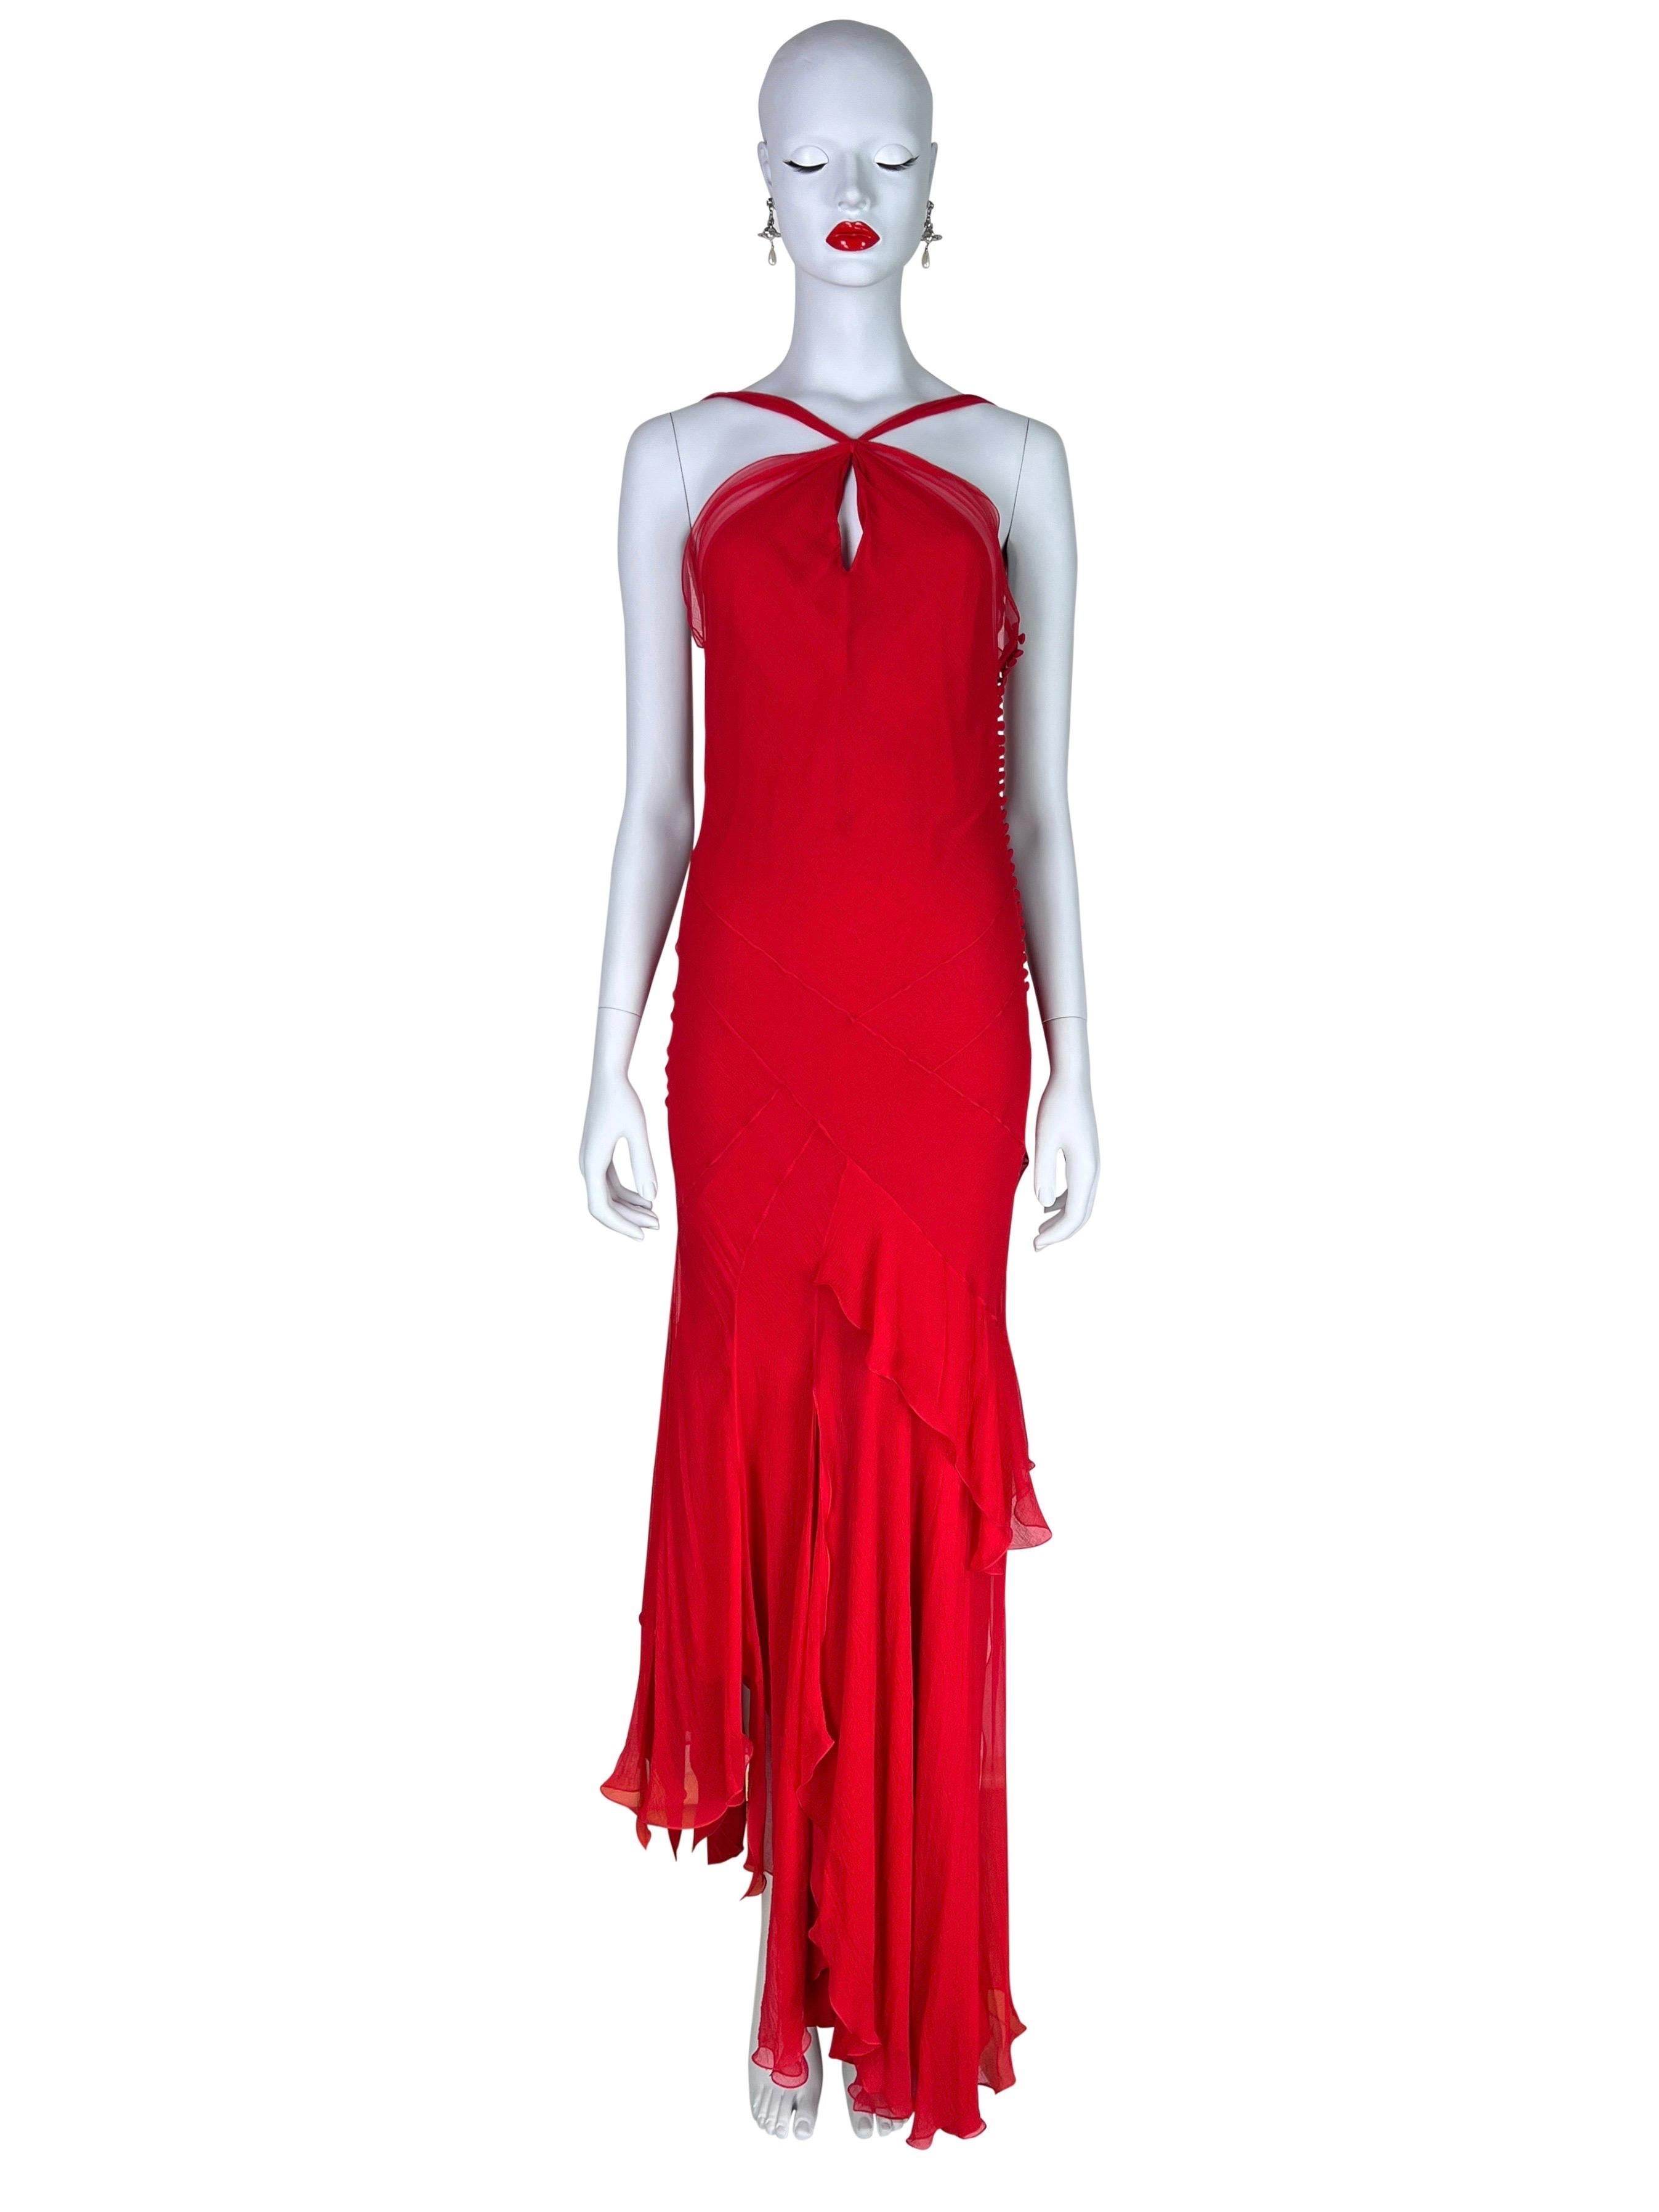 Dior by John Galliano Spring 2004 Red Bias Cut Silk Chiffon Dress 7